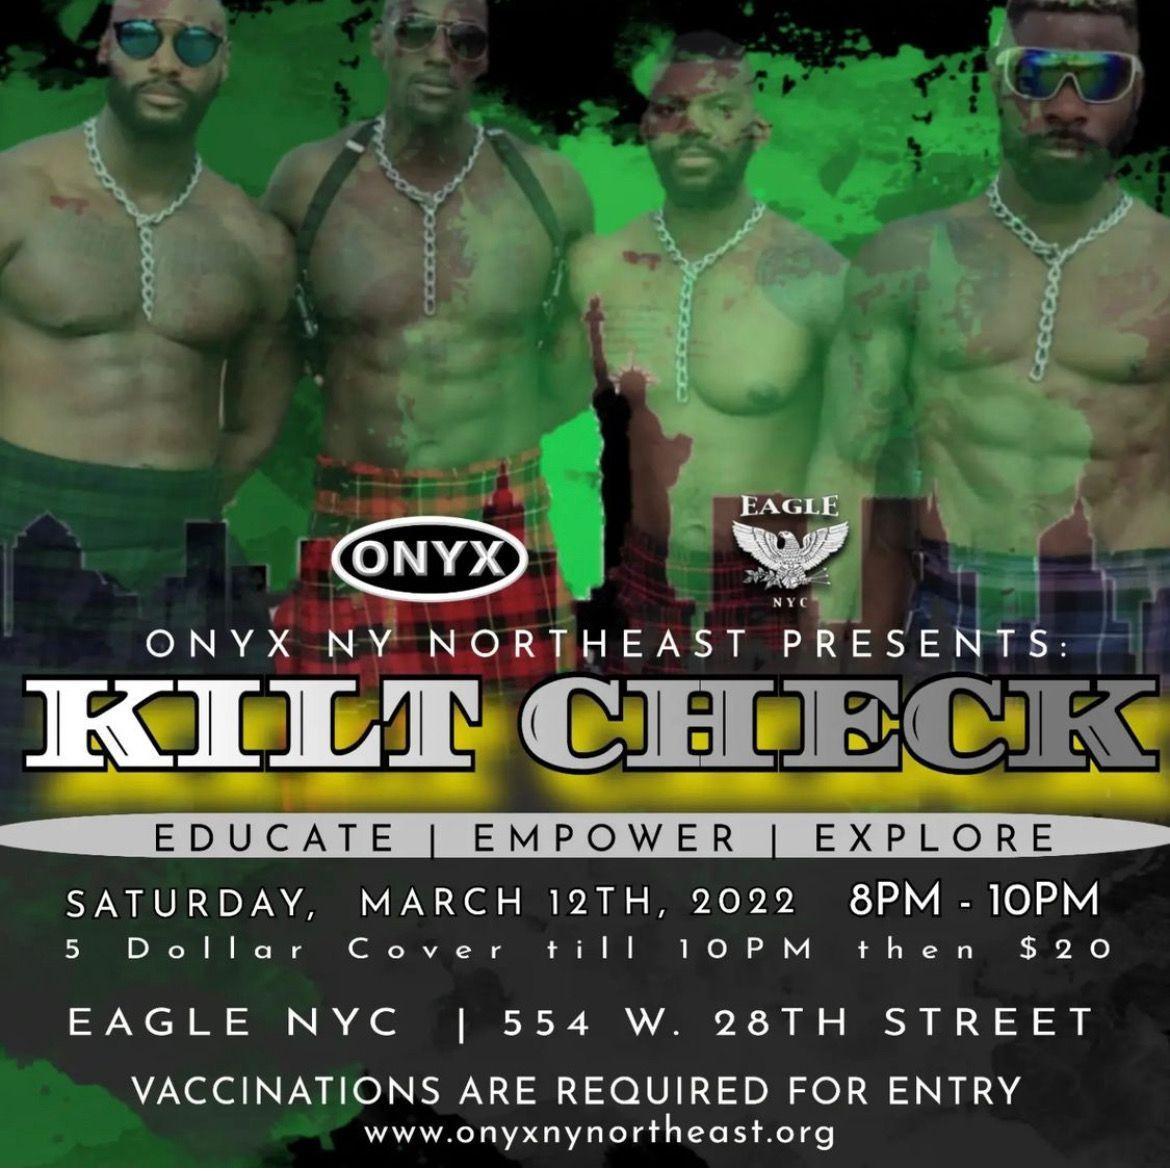 Onyx Kilt Check